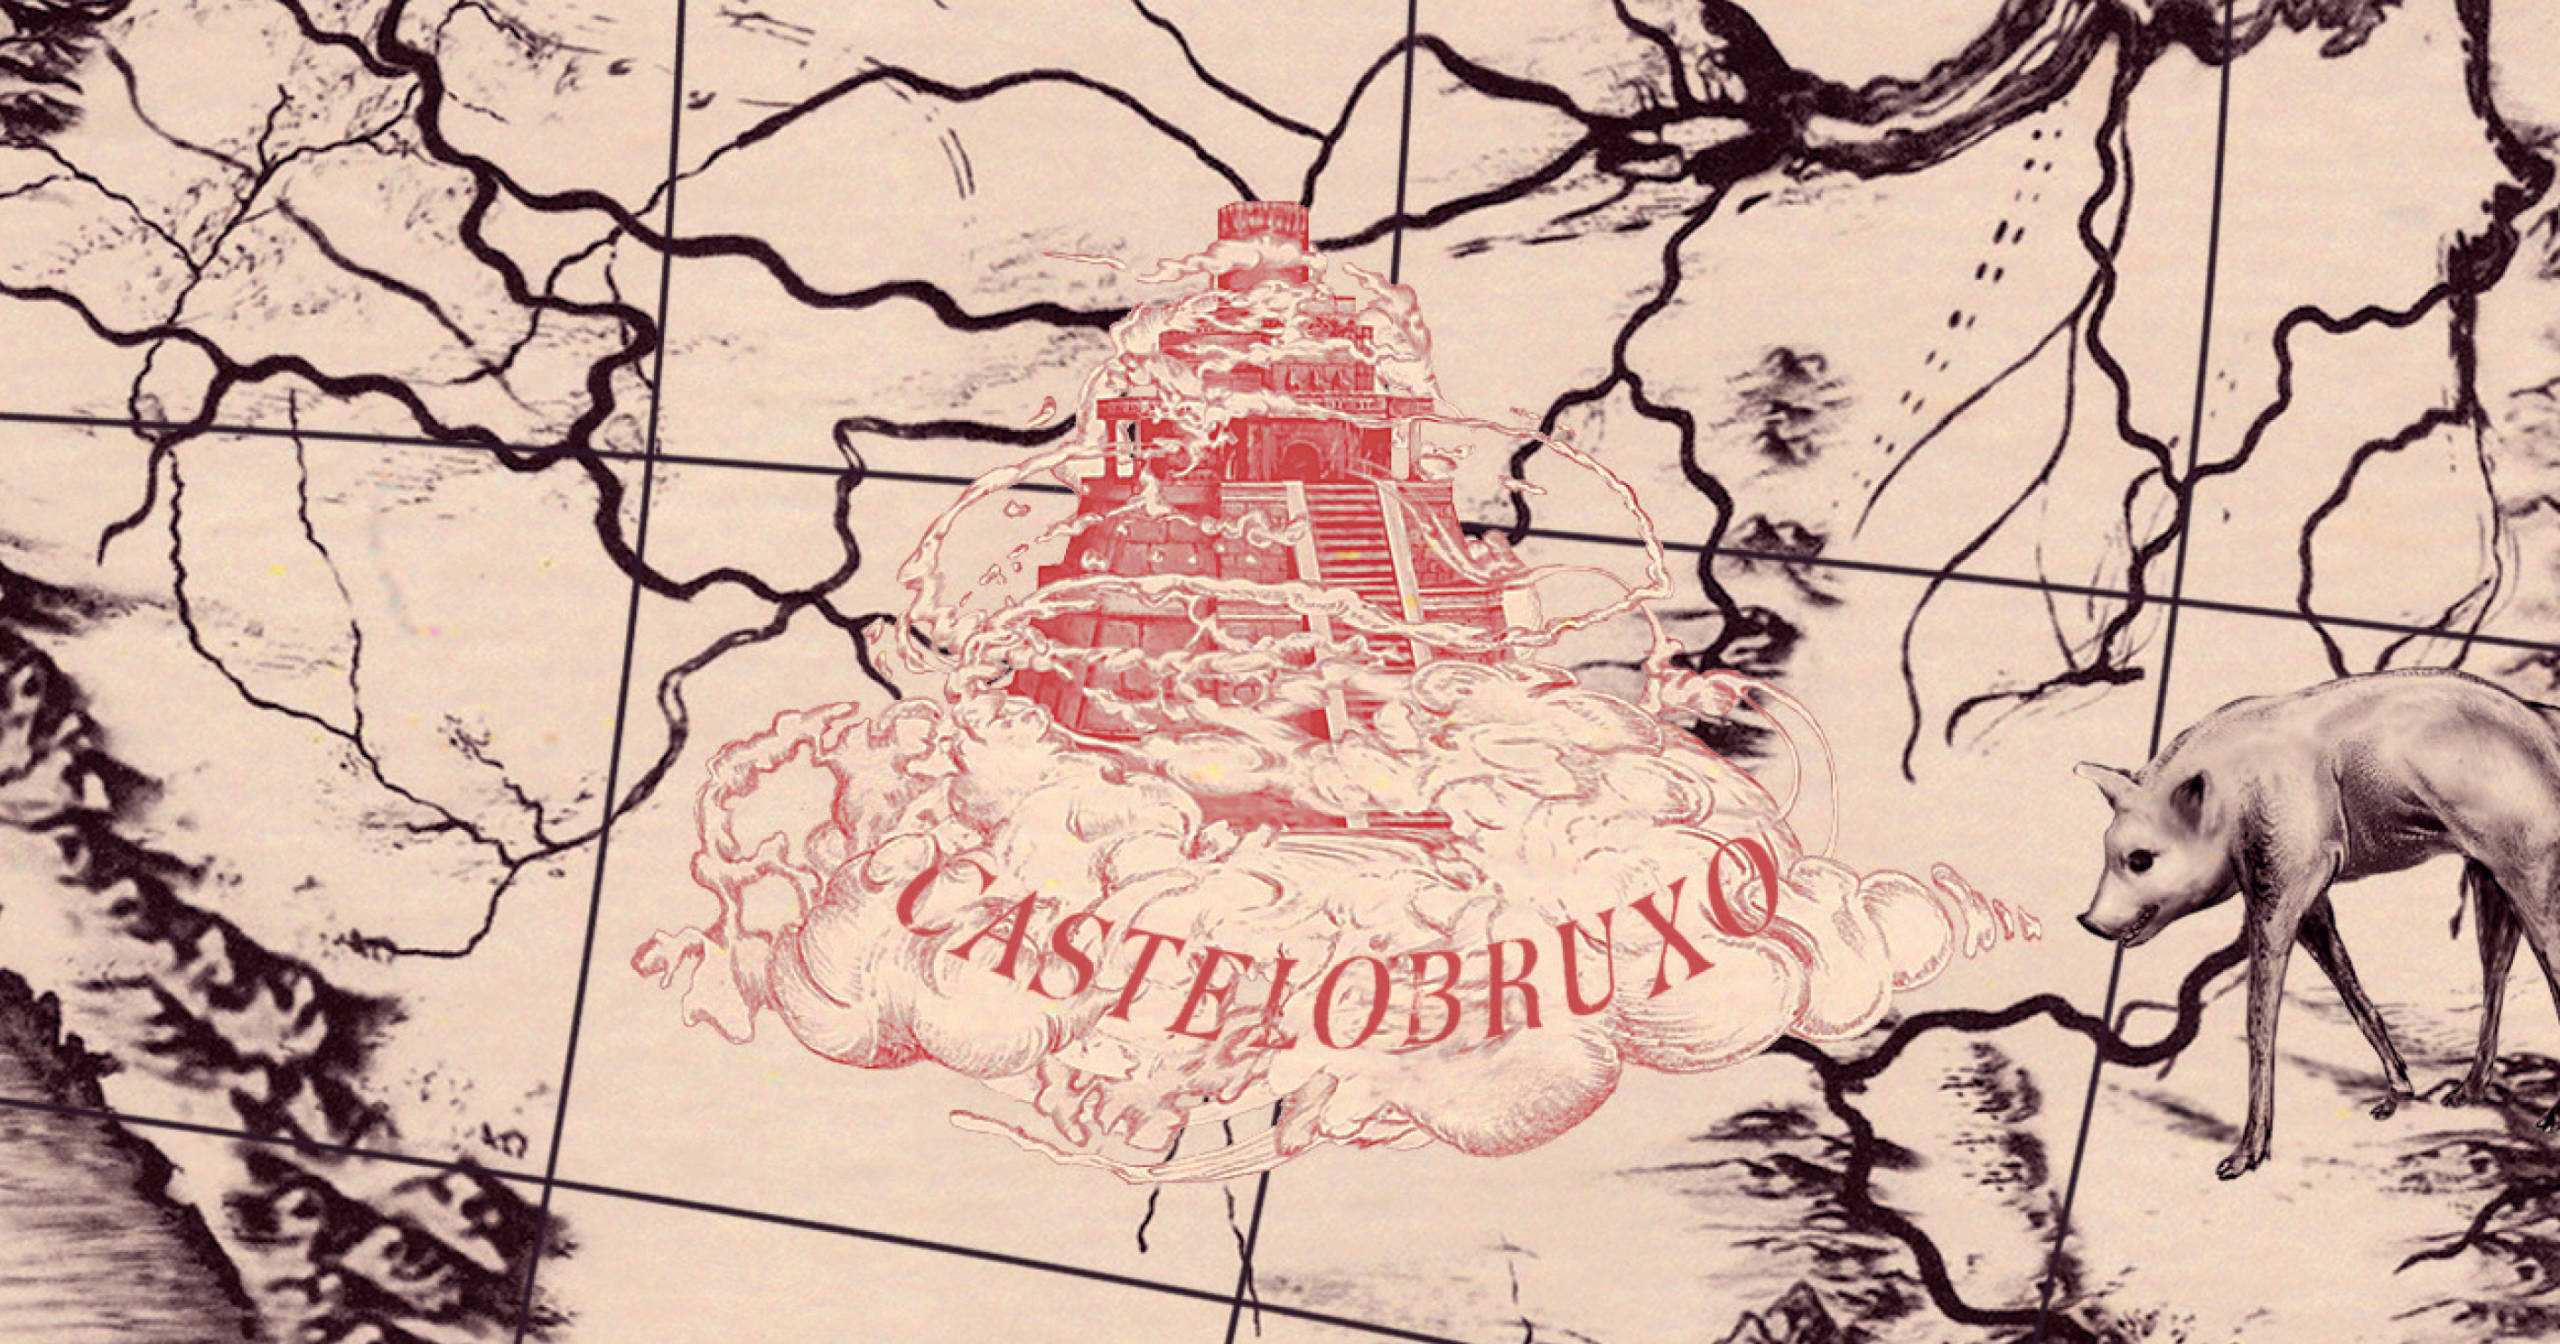 Wizarding School Castelobruxo with name